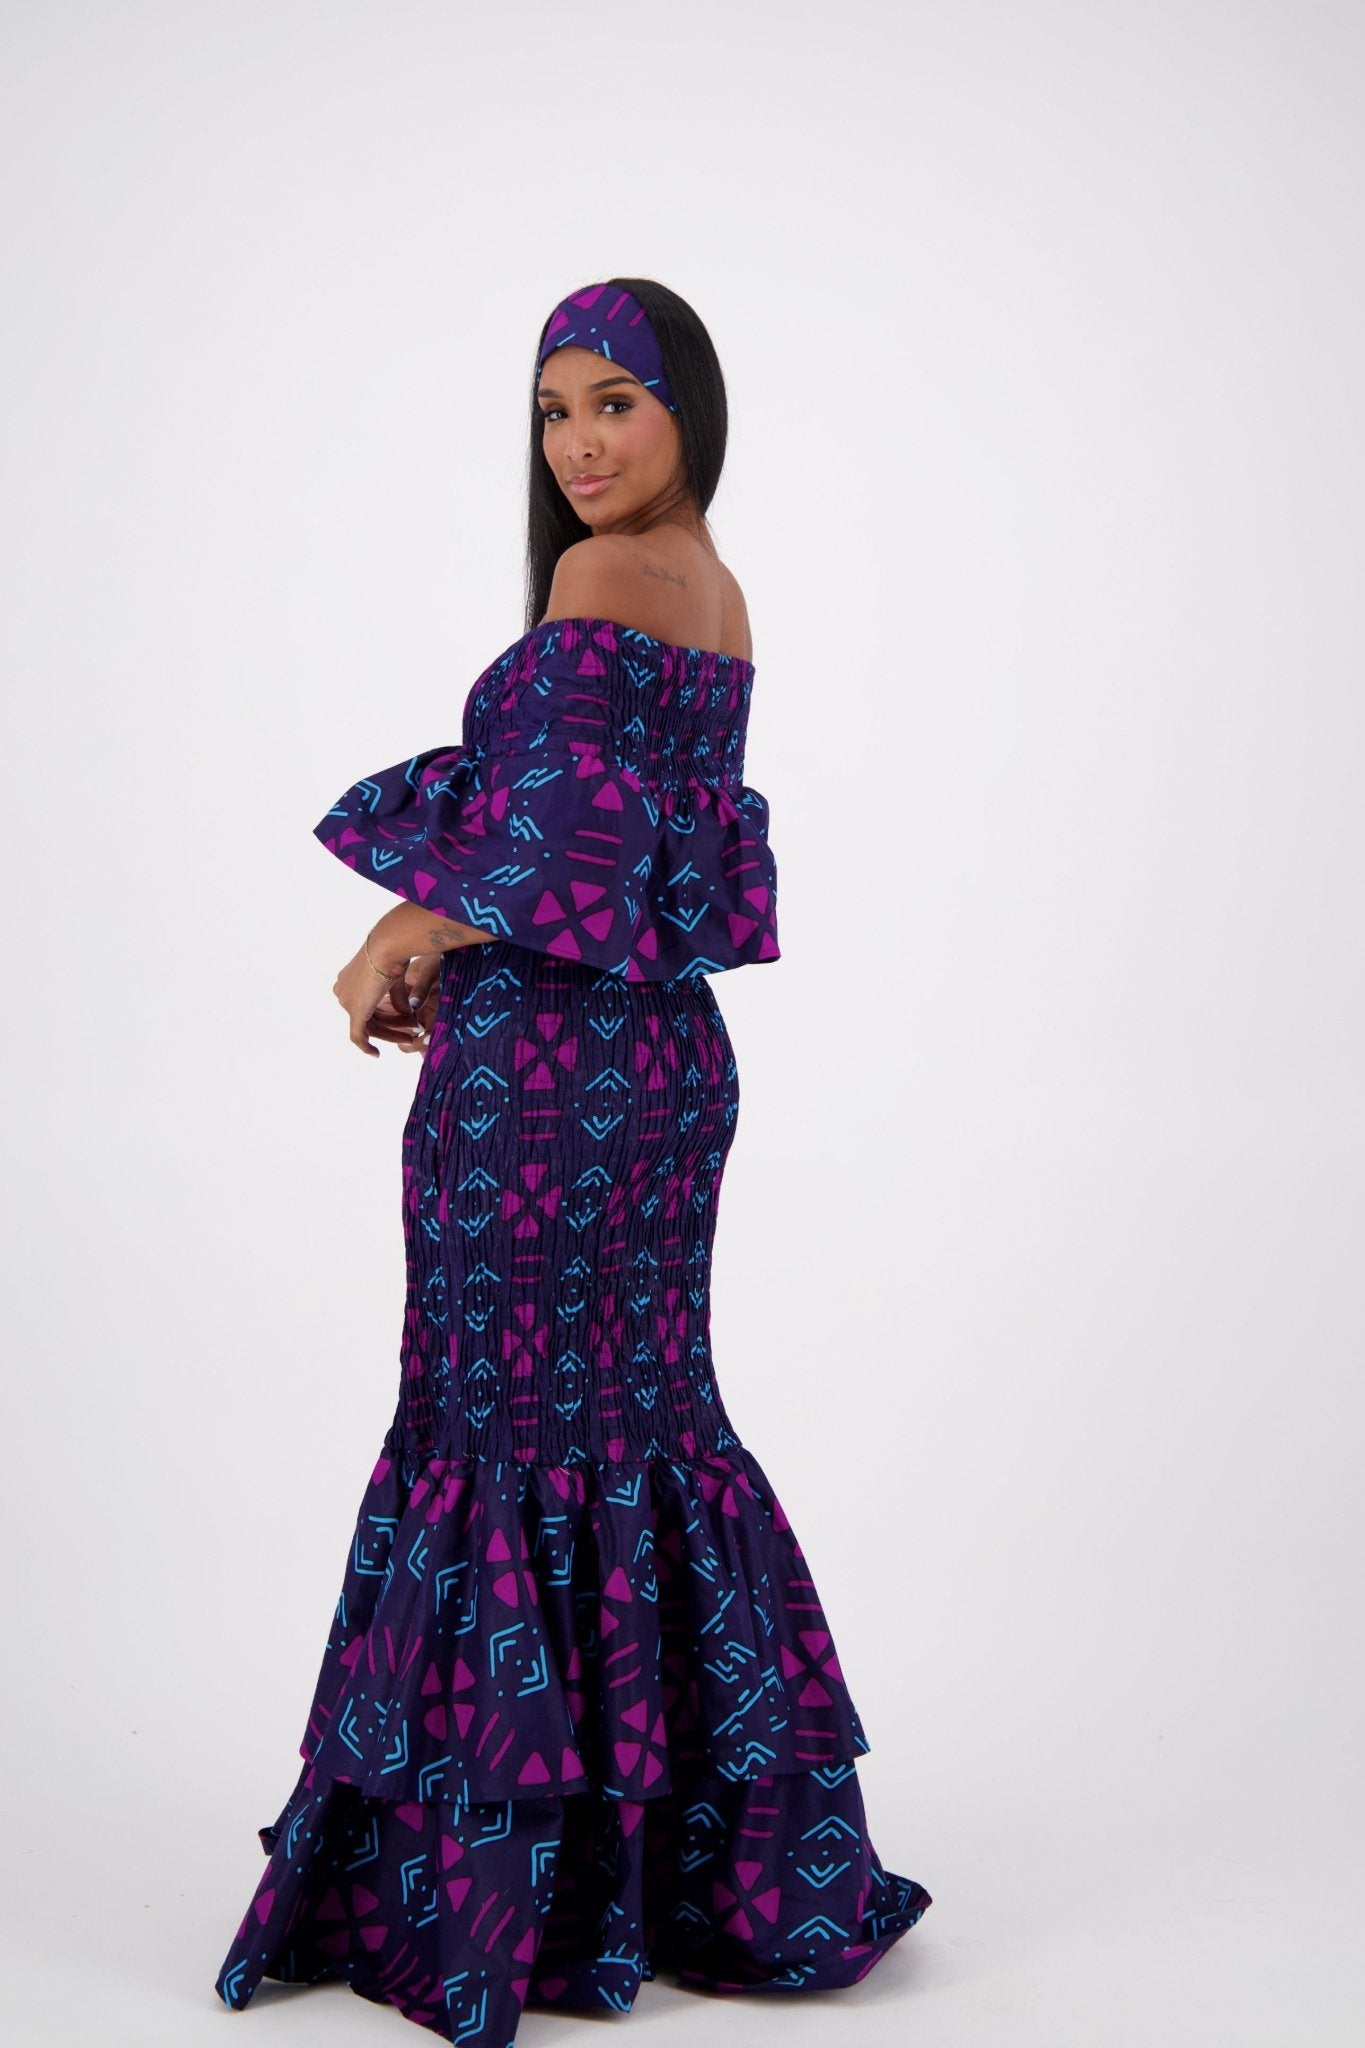 African Print Mermaid Dress AD-2289-238 - Advance Apparels Inc